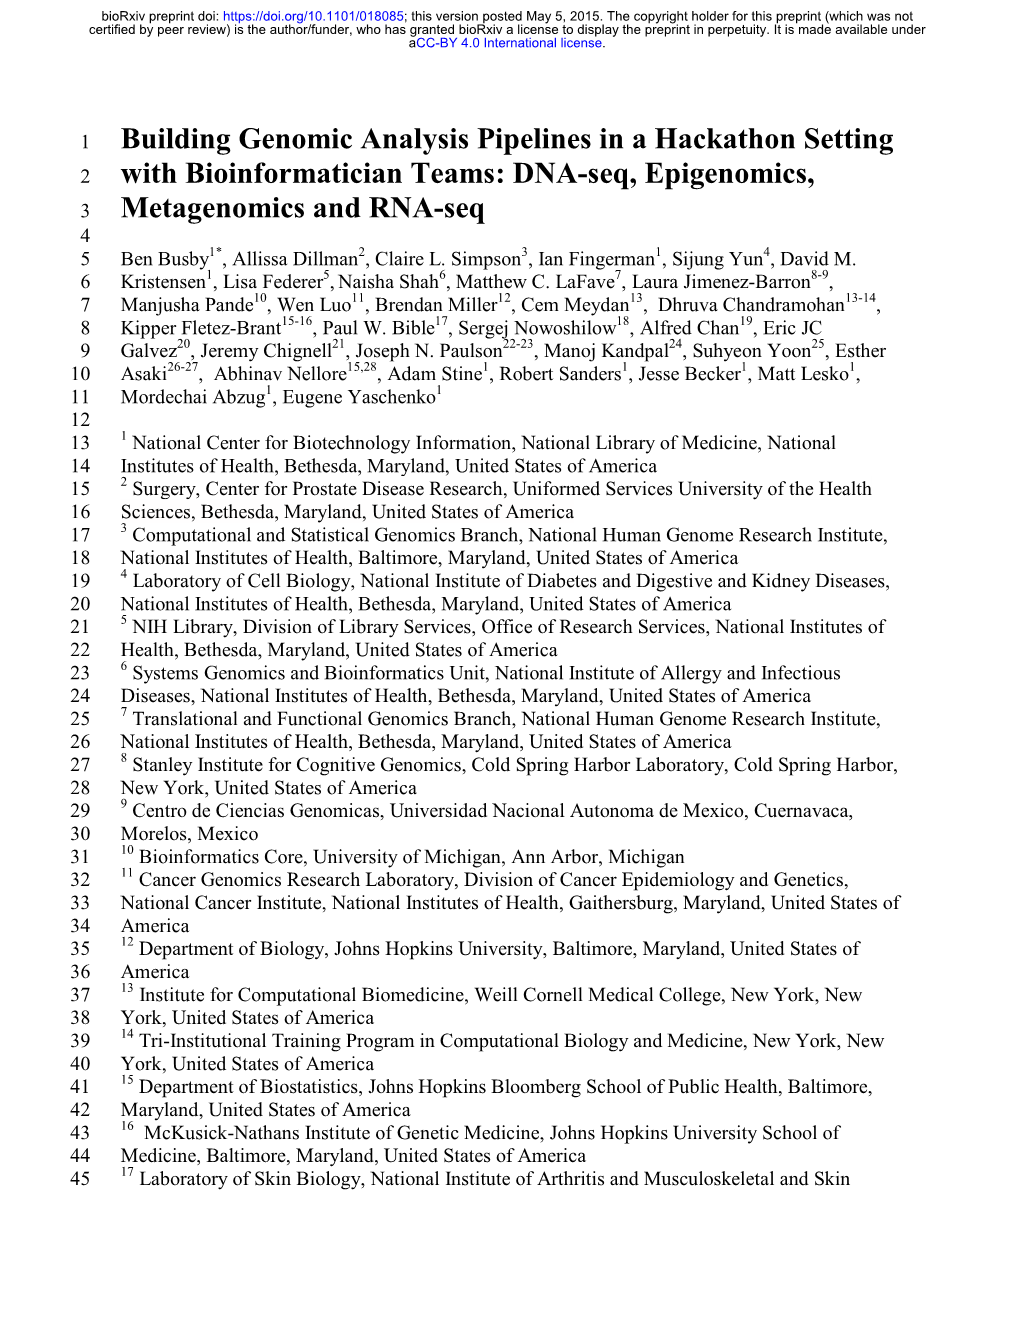 DNA-Seq, Epigenomics, Metagenomics and RNA-Seq Subfields of Genomics